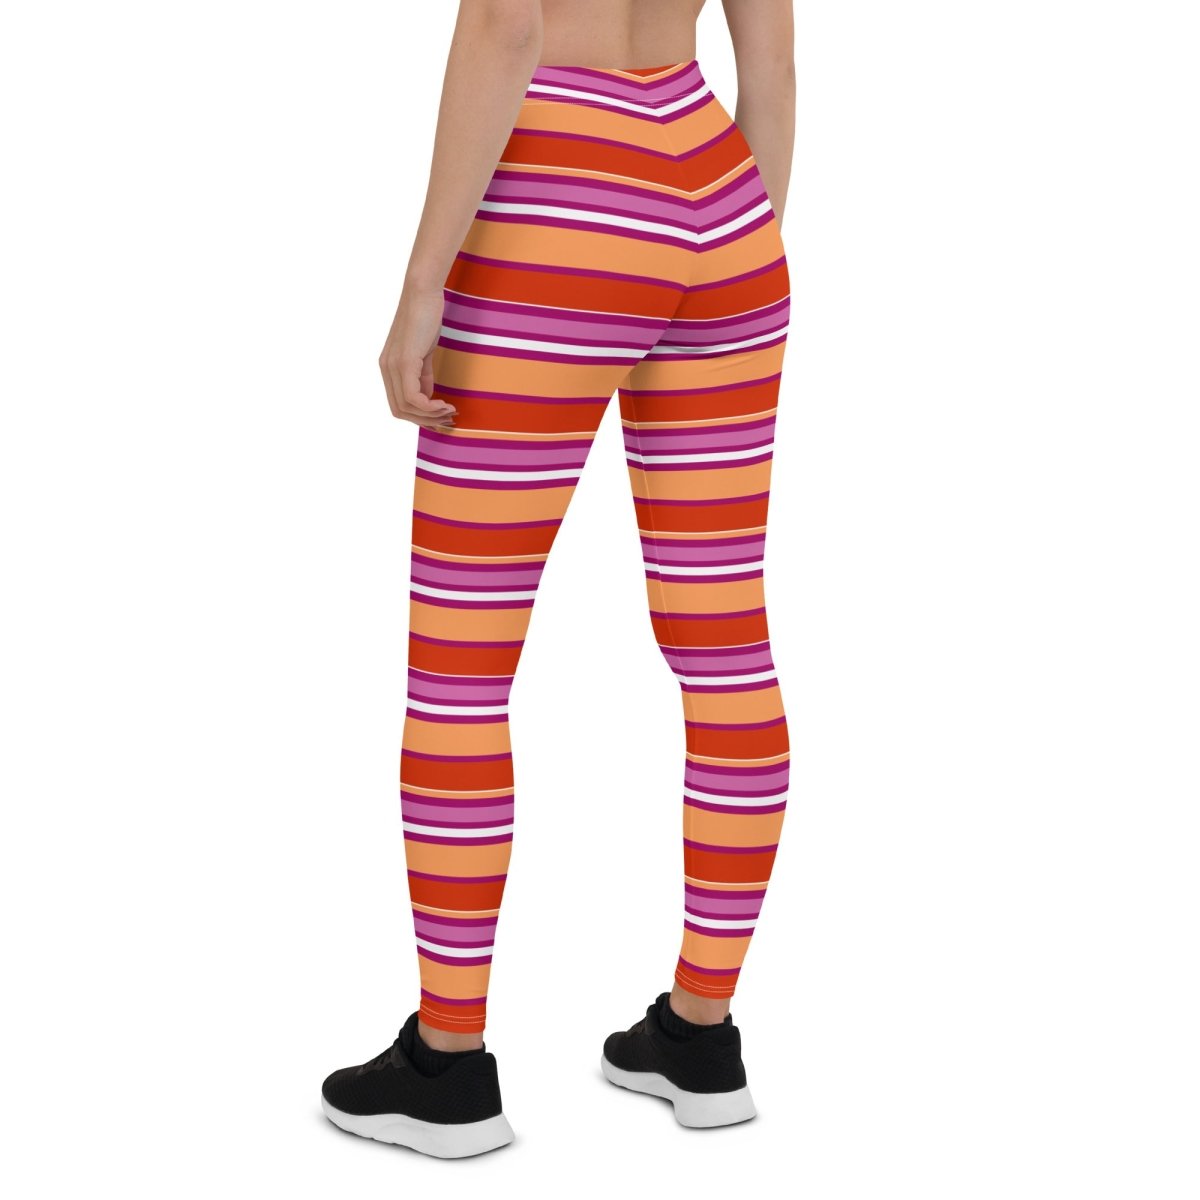 Striped Lesbian Leggings - On Trend Shirts